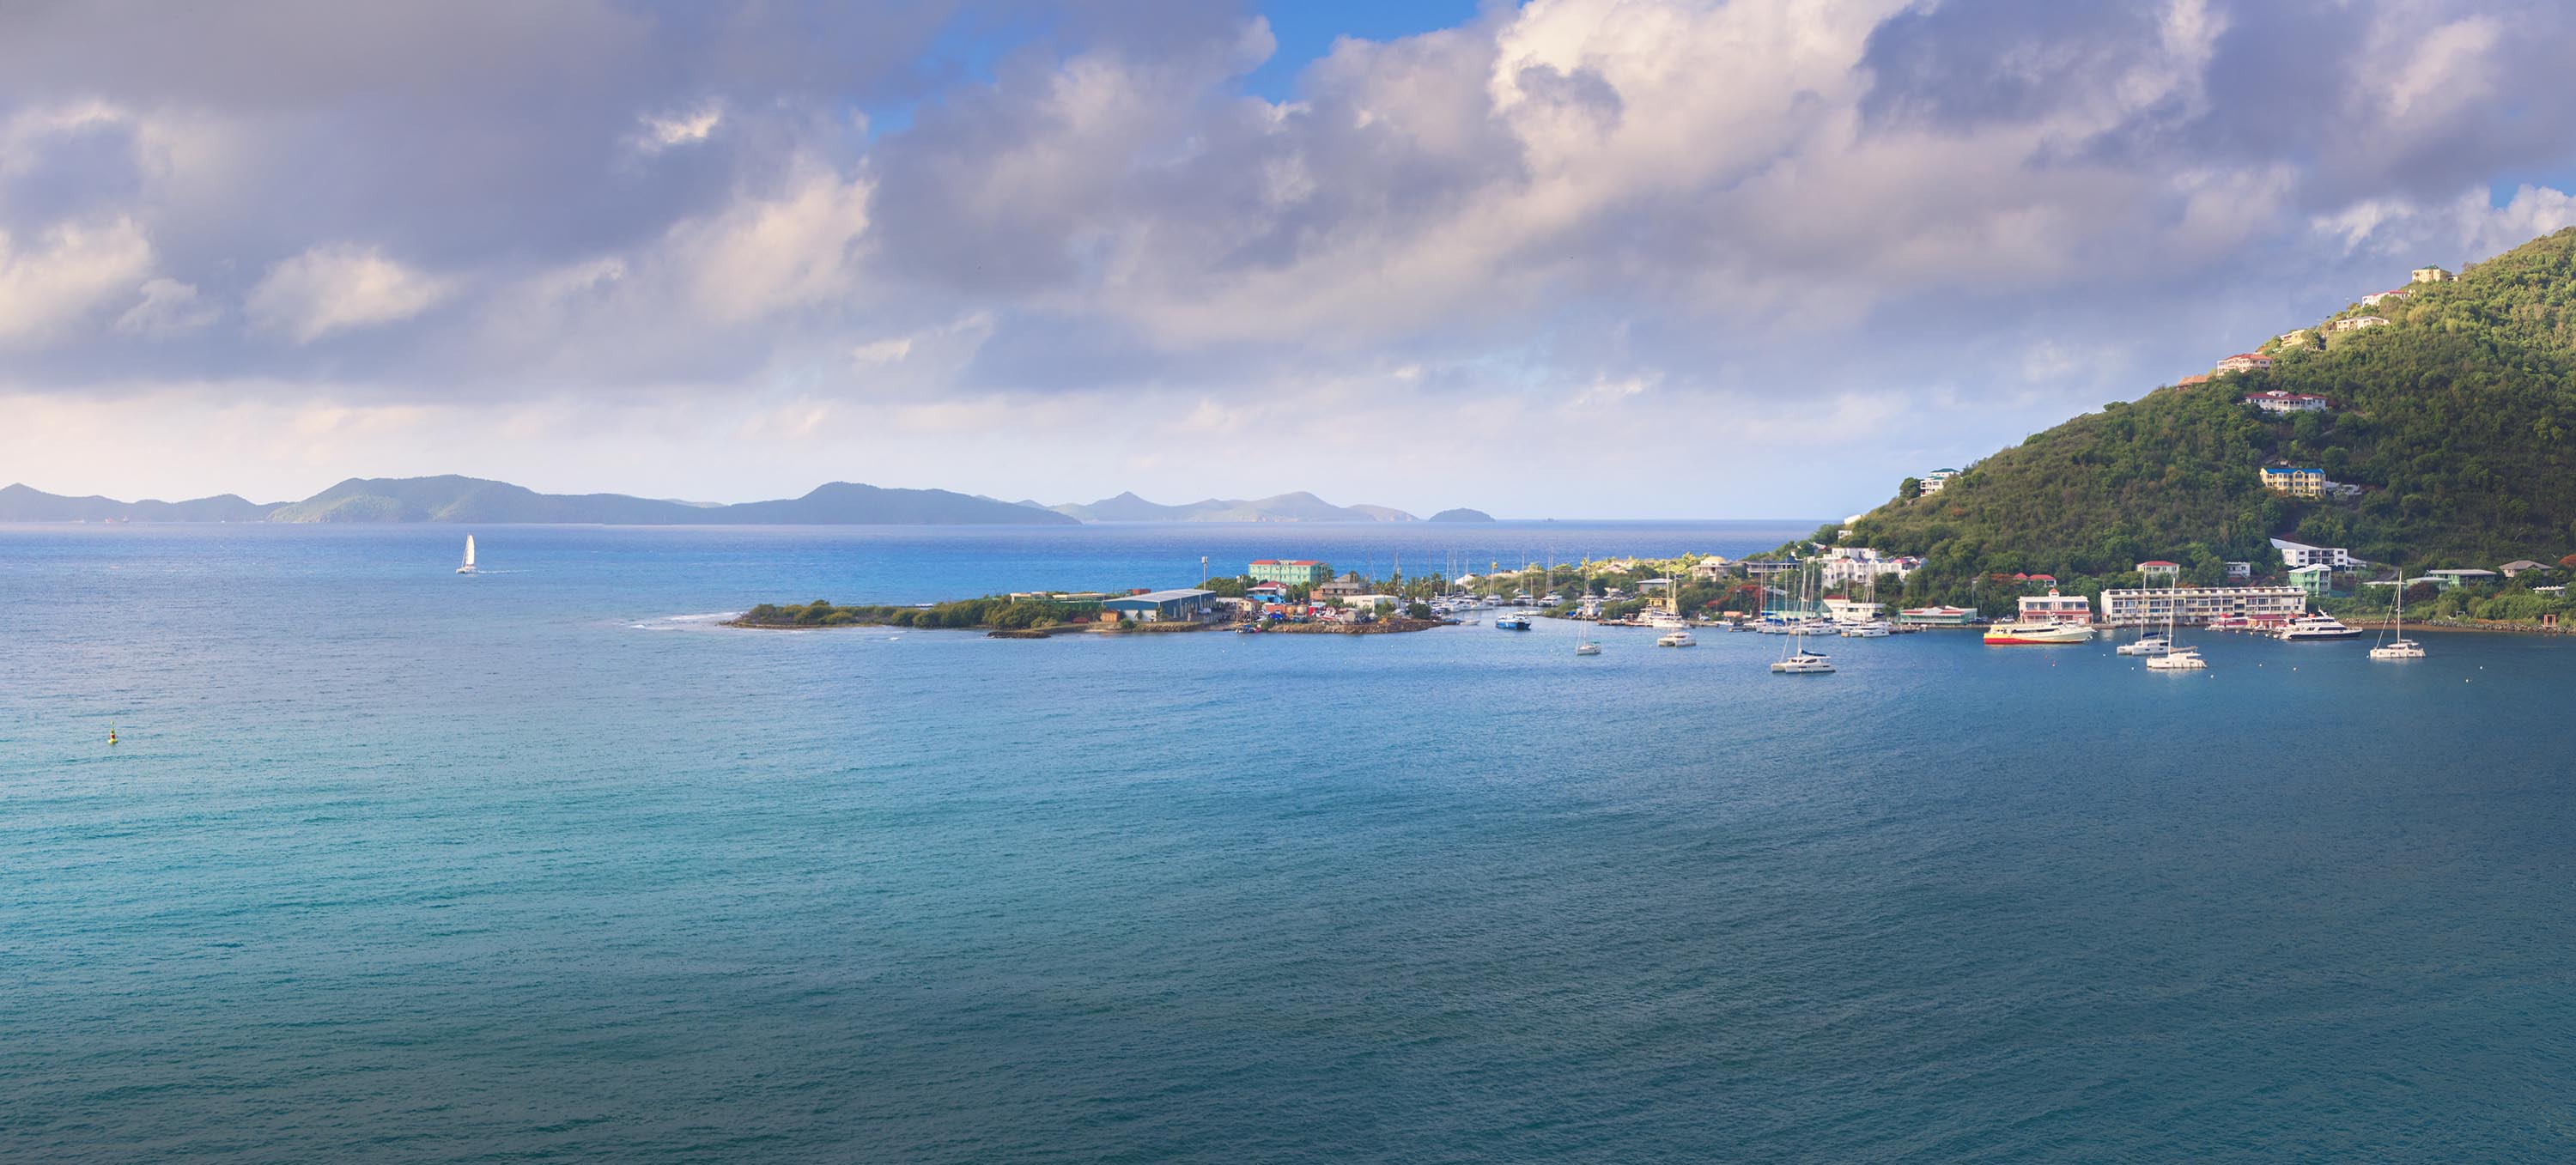 Island of Tortola - British Virgin Islands